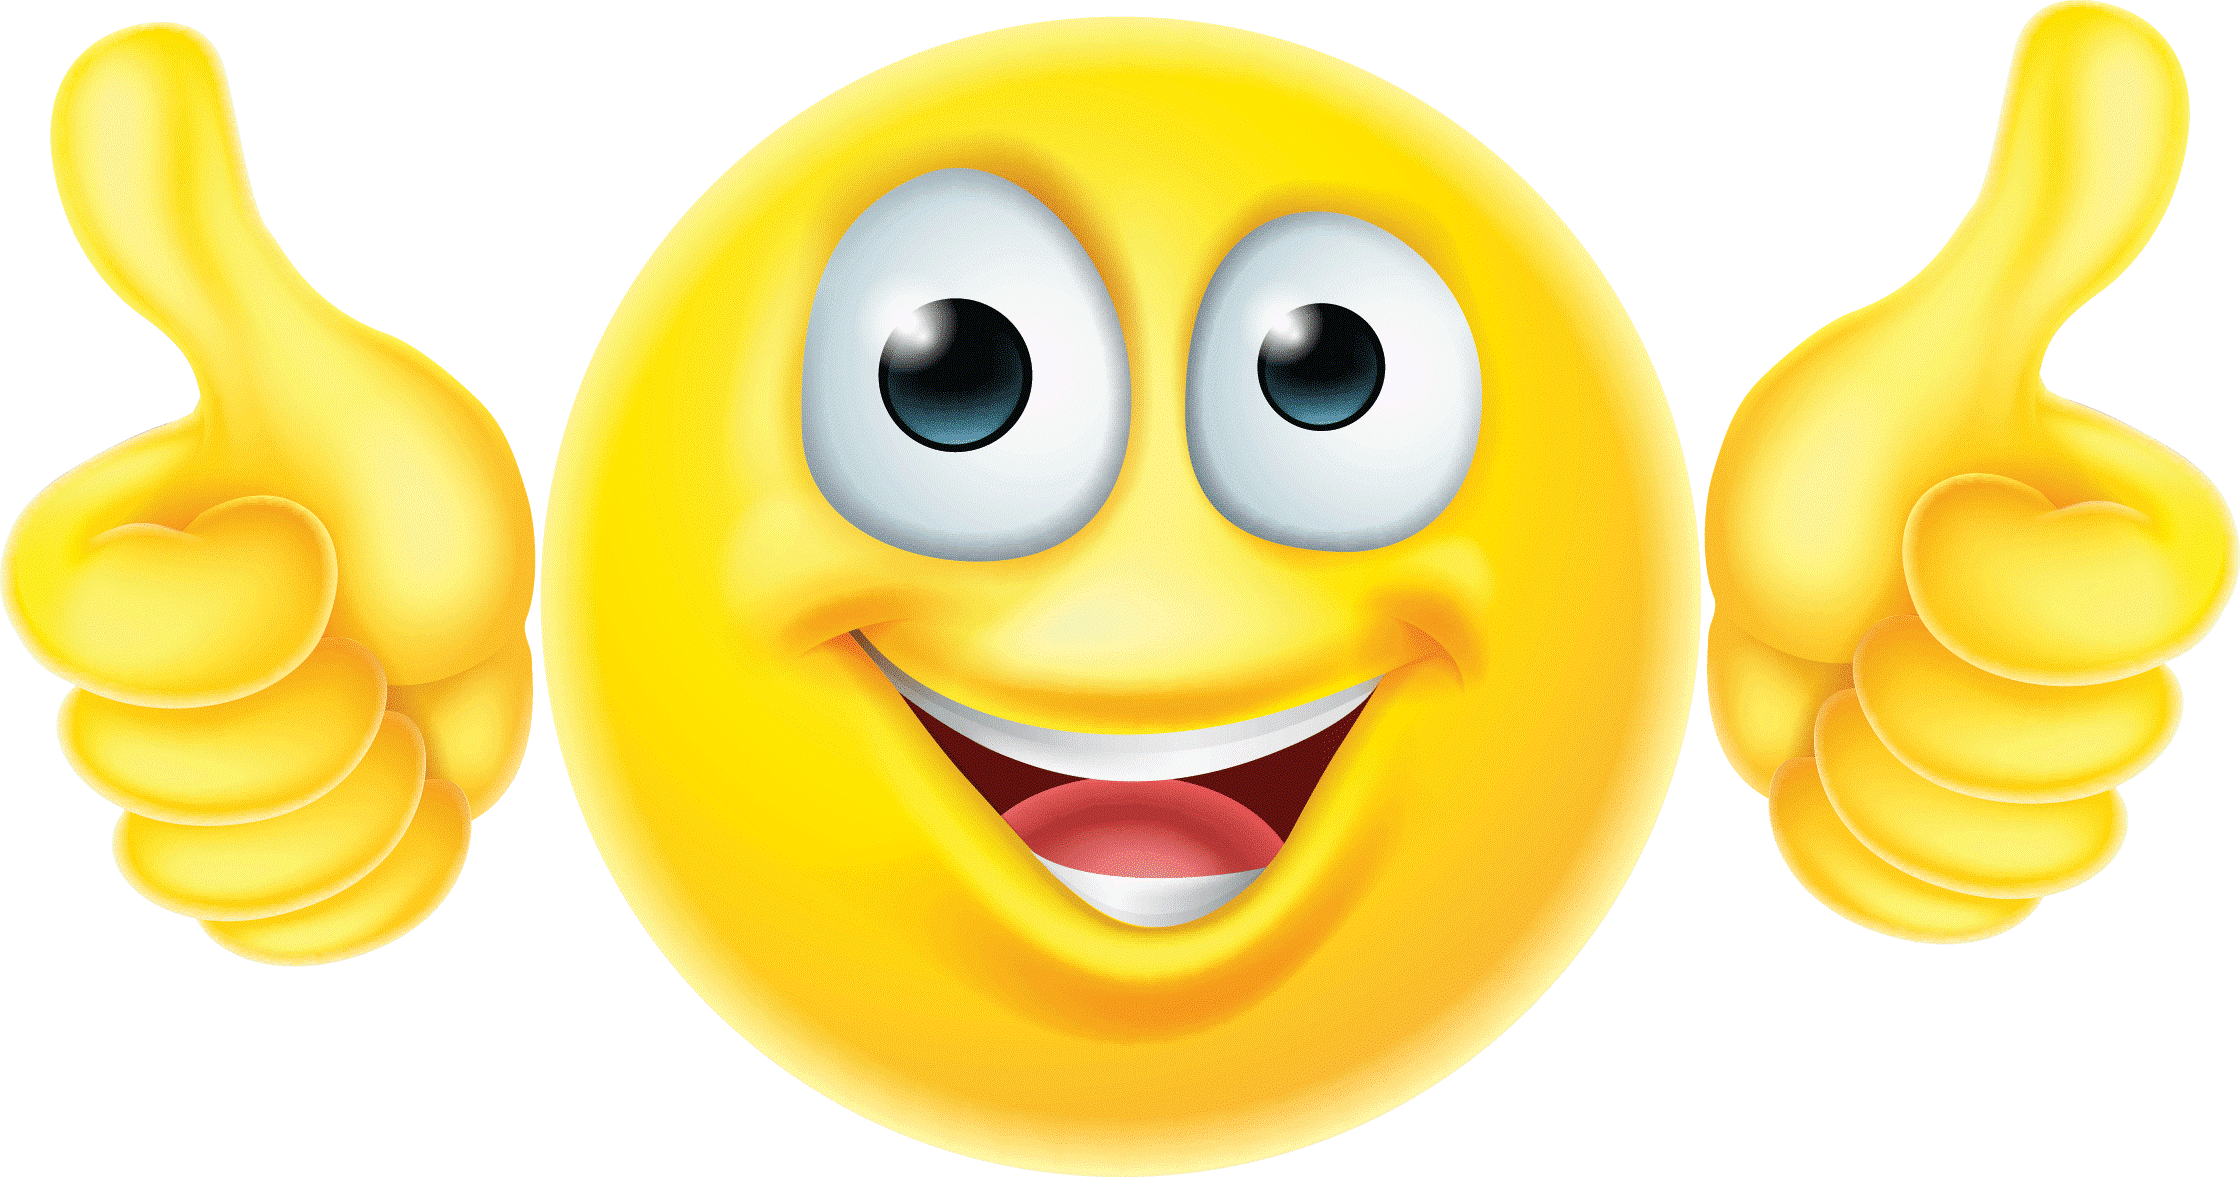 Emoticon Emoji Smiley Like Button - Emoji Smiley Face With Hands (2240x1177)